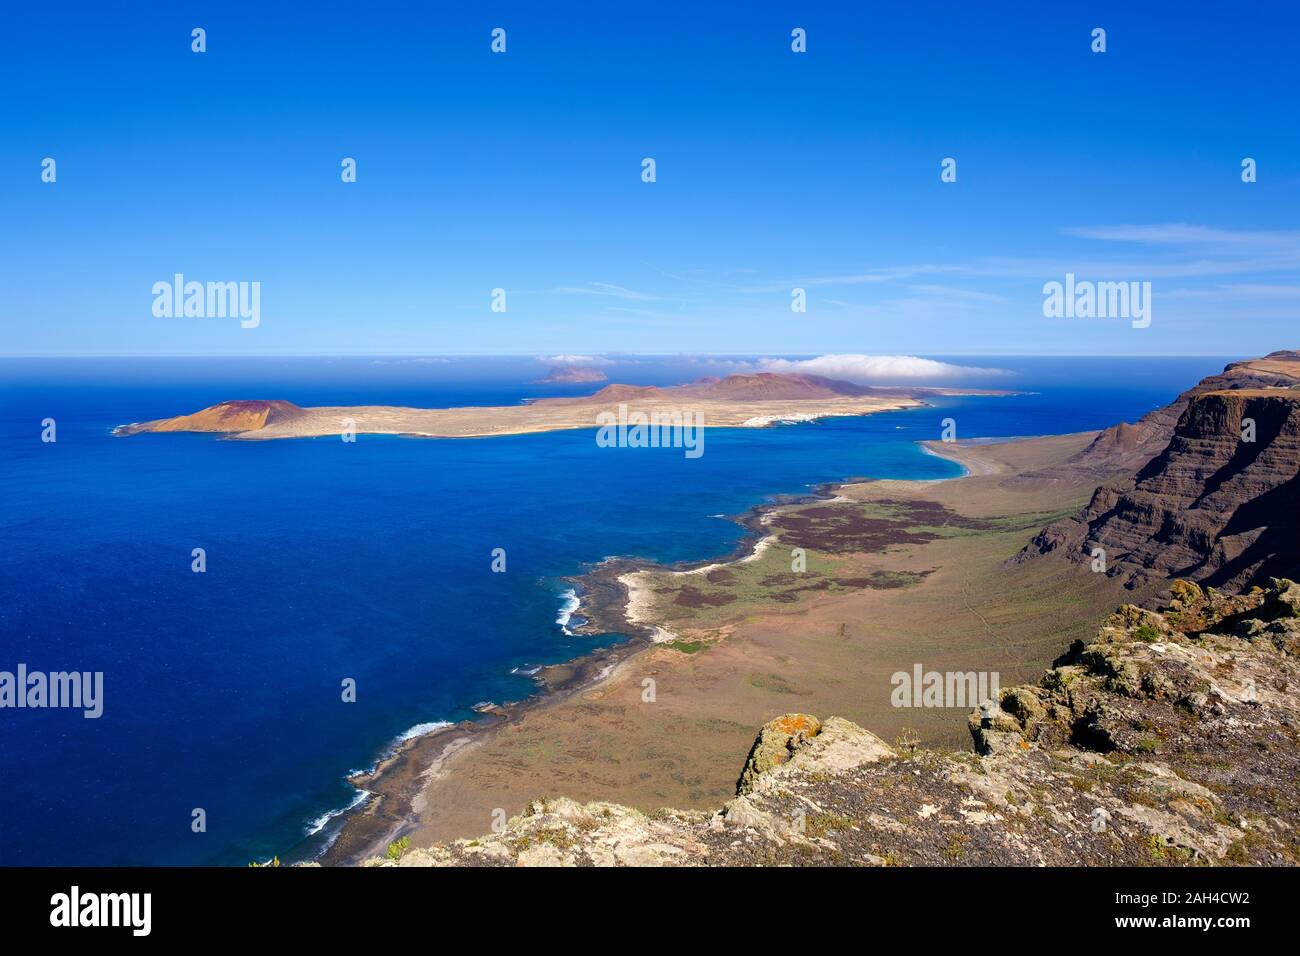 Espagne, Canaries, vue panoramique de Montana Clara islet vu de falaise côtière de La Graciosa Banque D'Images